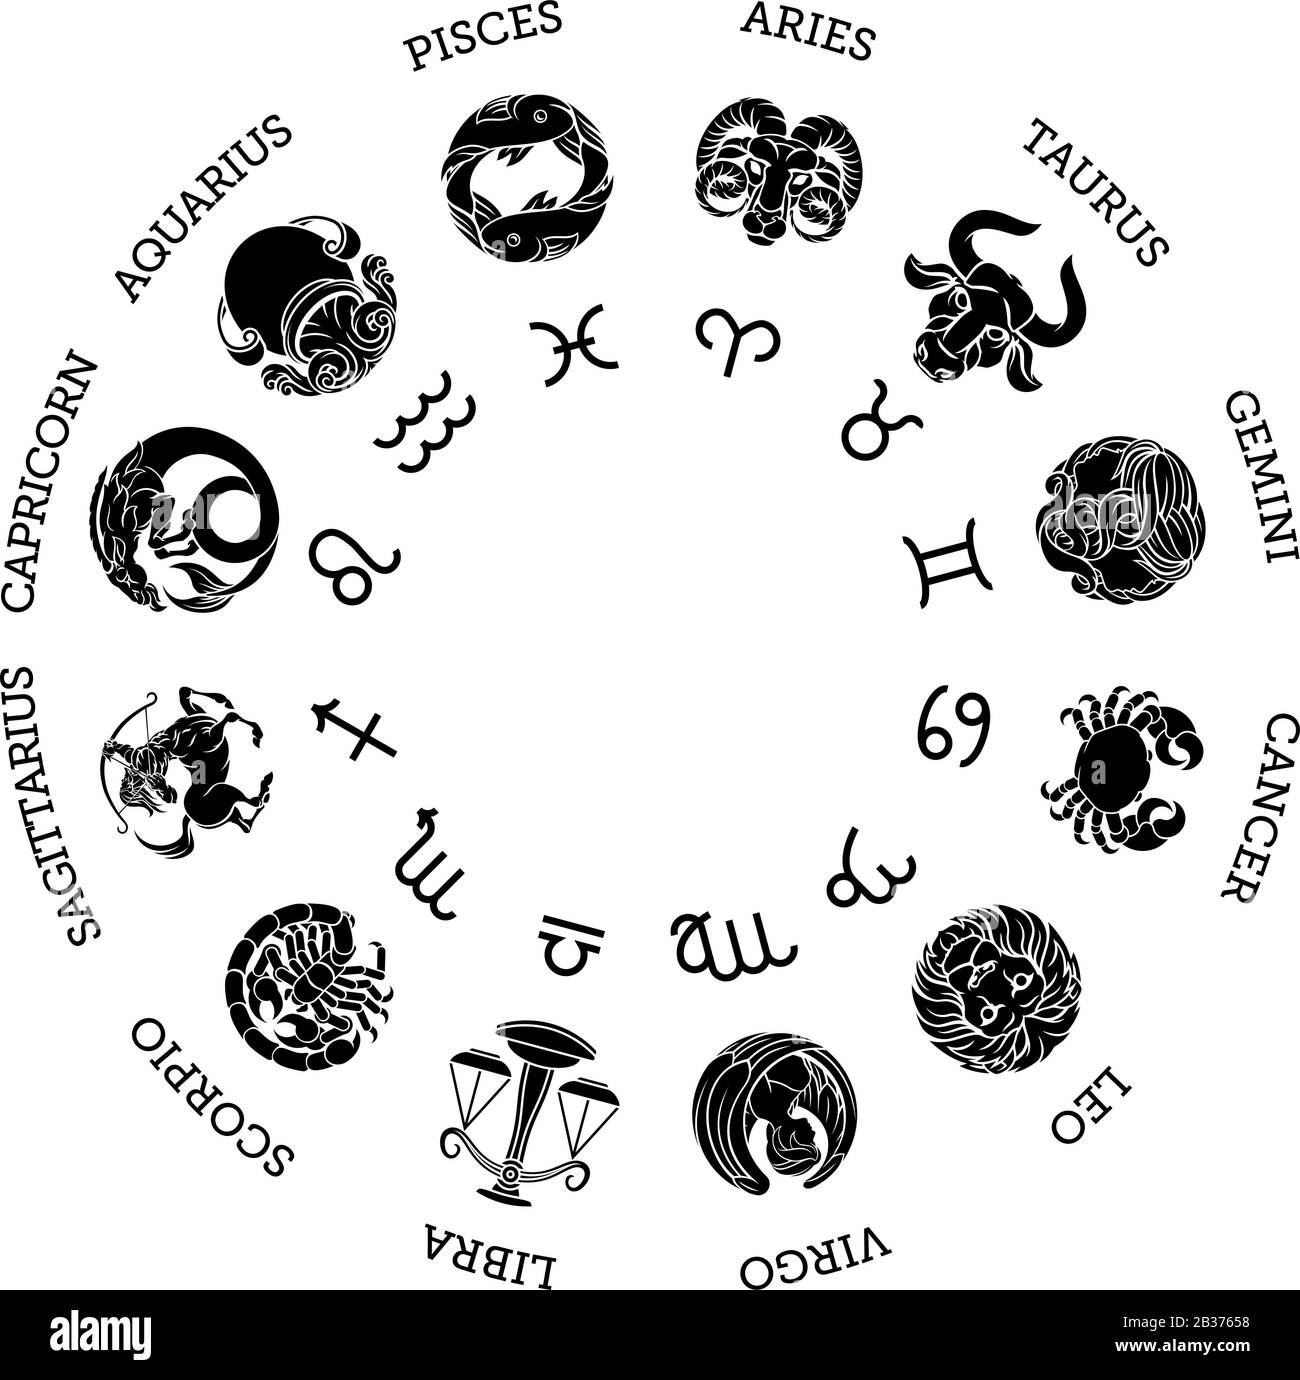 Astrological zodiac horoscope star signs symbols Stock Vector